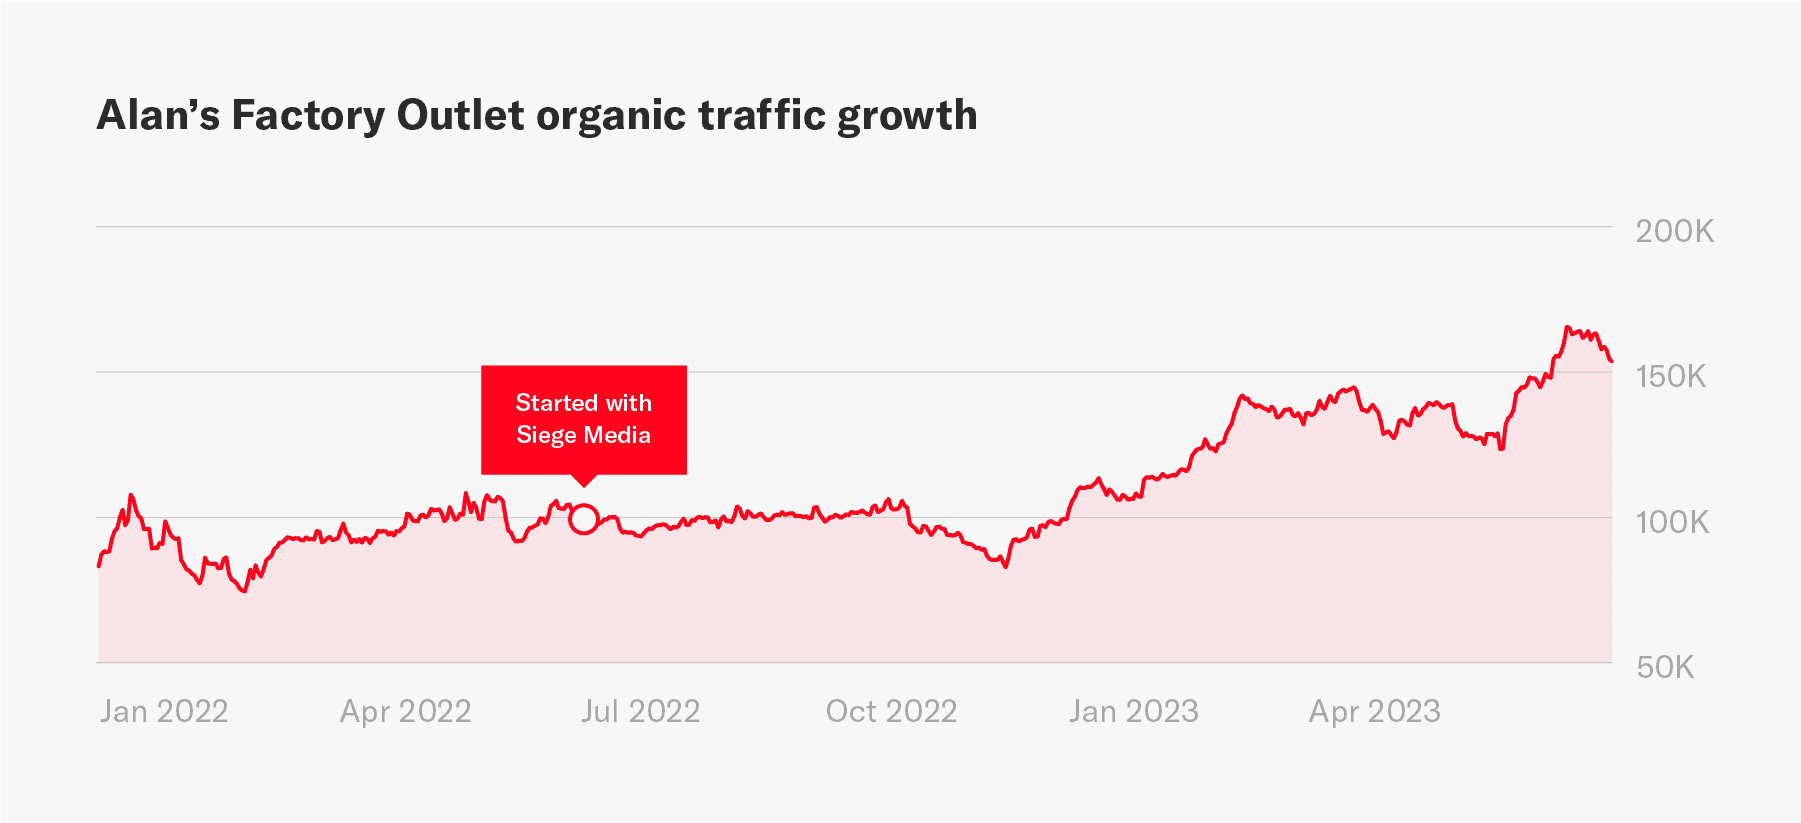 The impact of Siege Media on storage retailer organic traffic growth